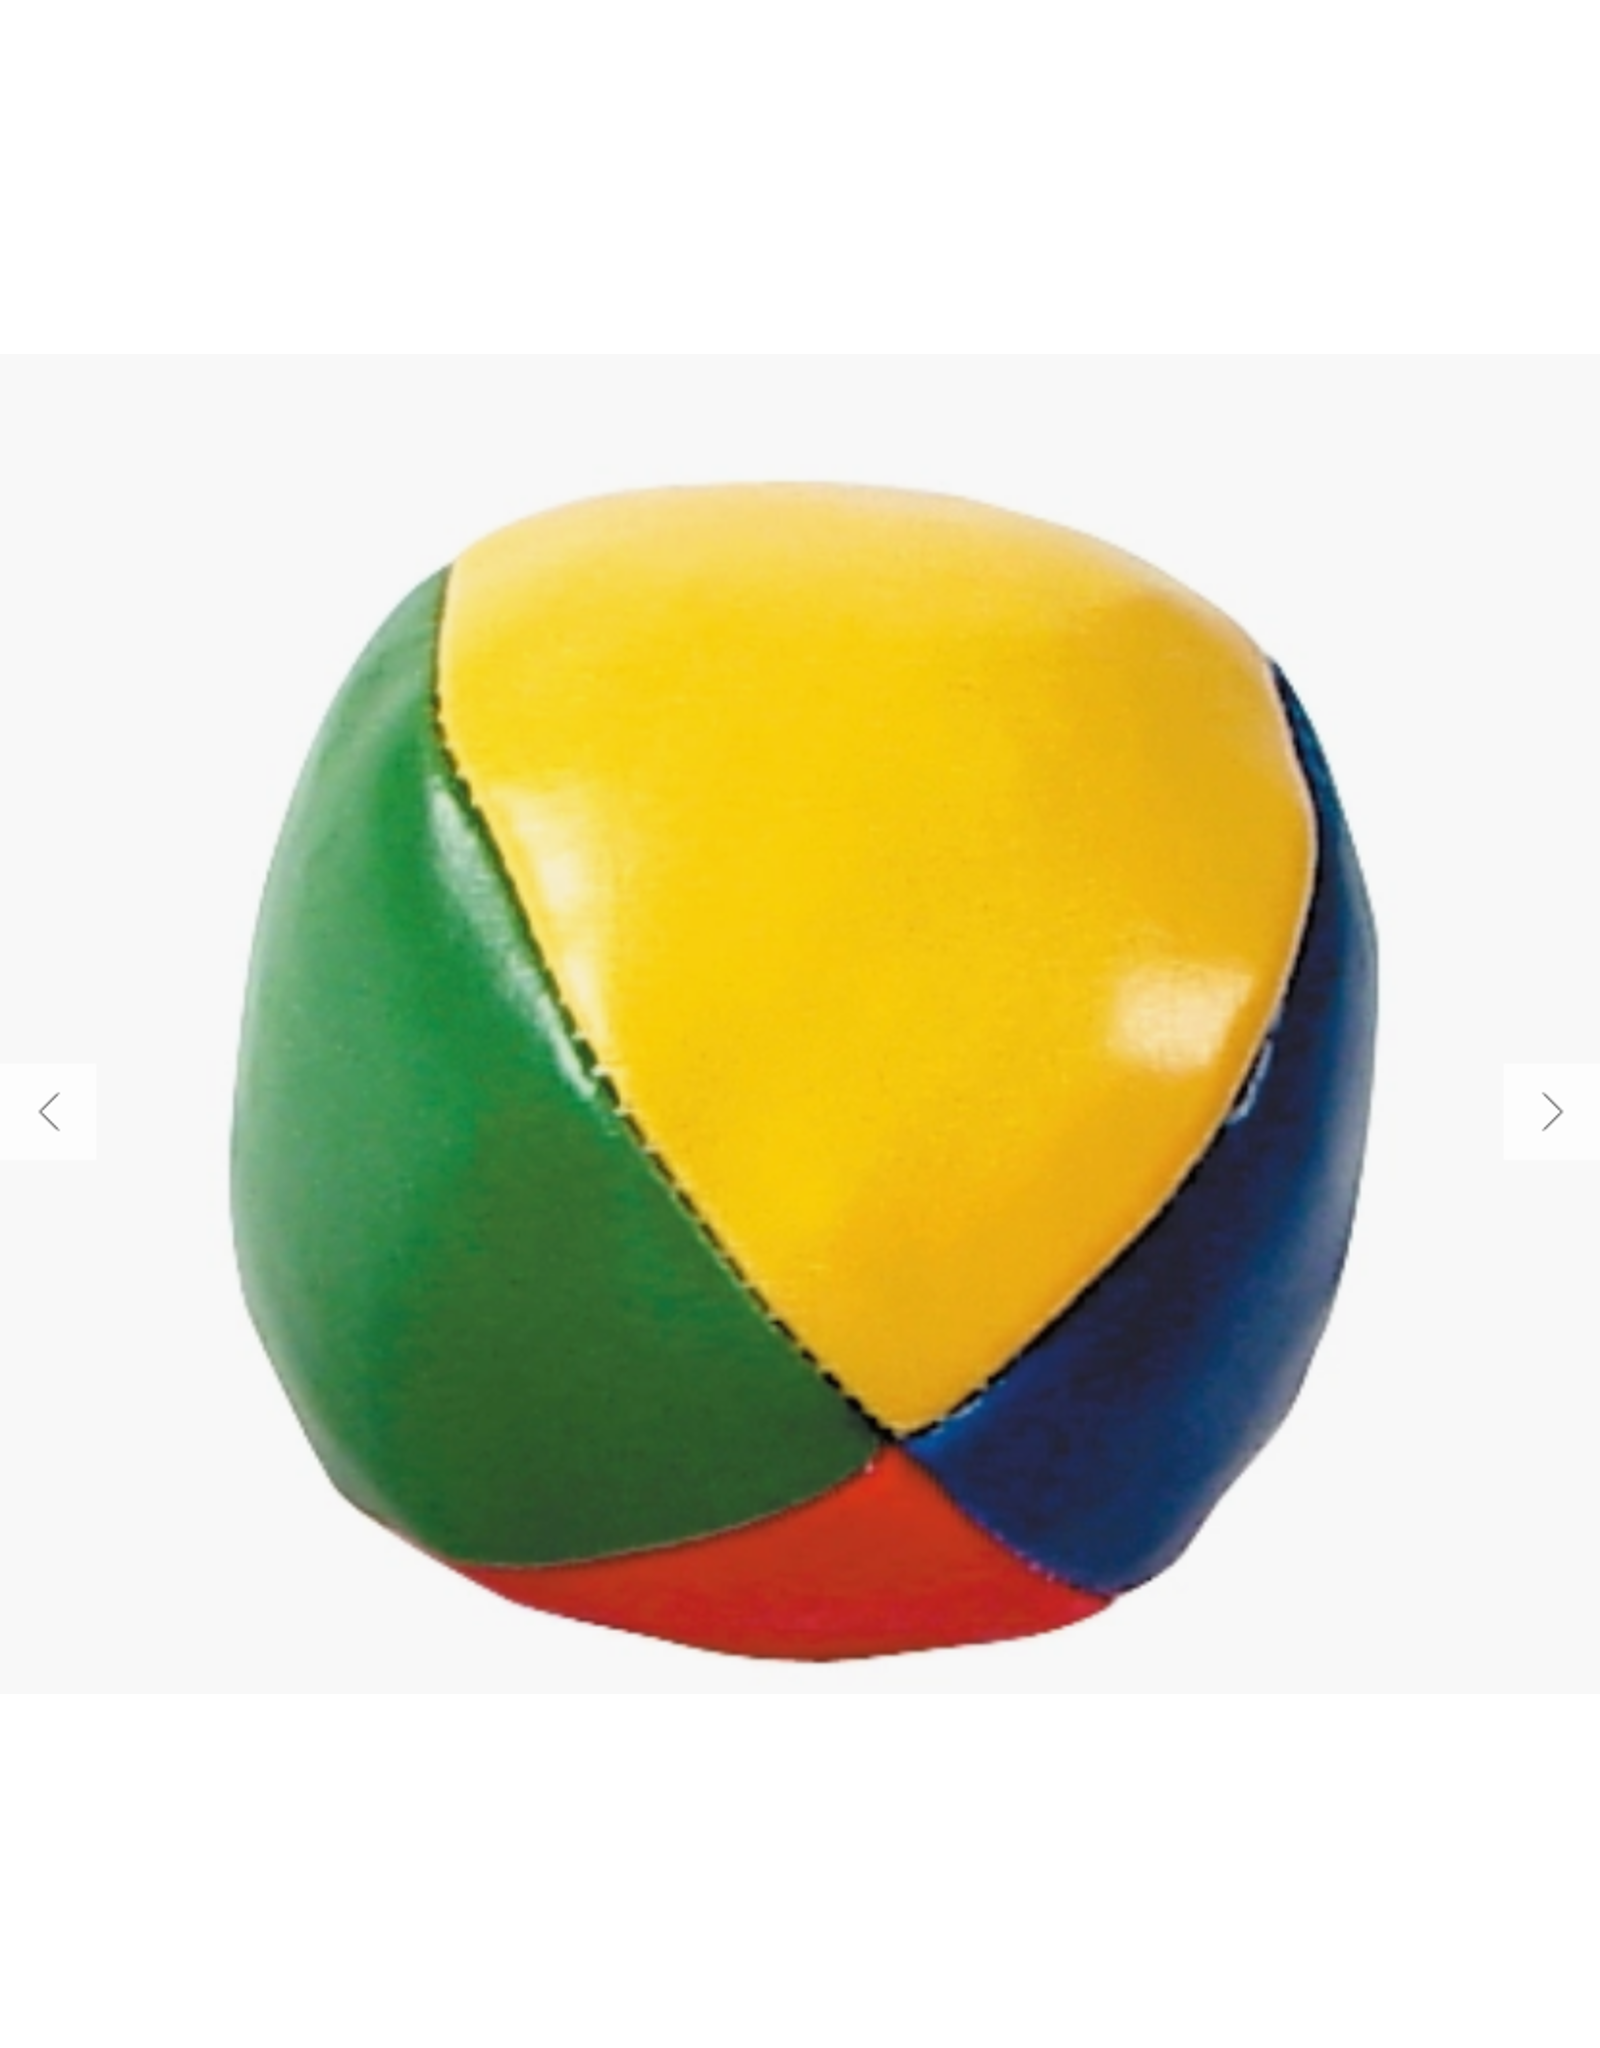 Toysmith Neato! Juggling Balls